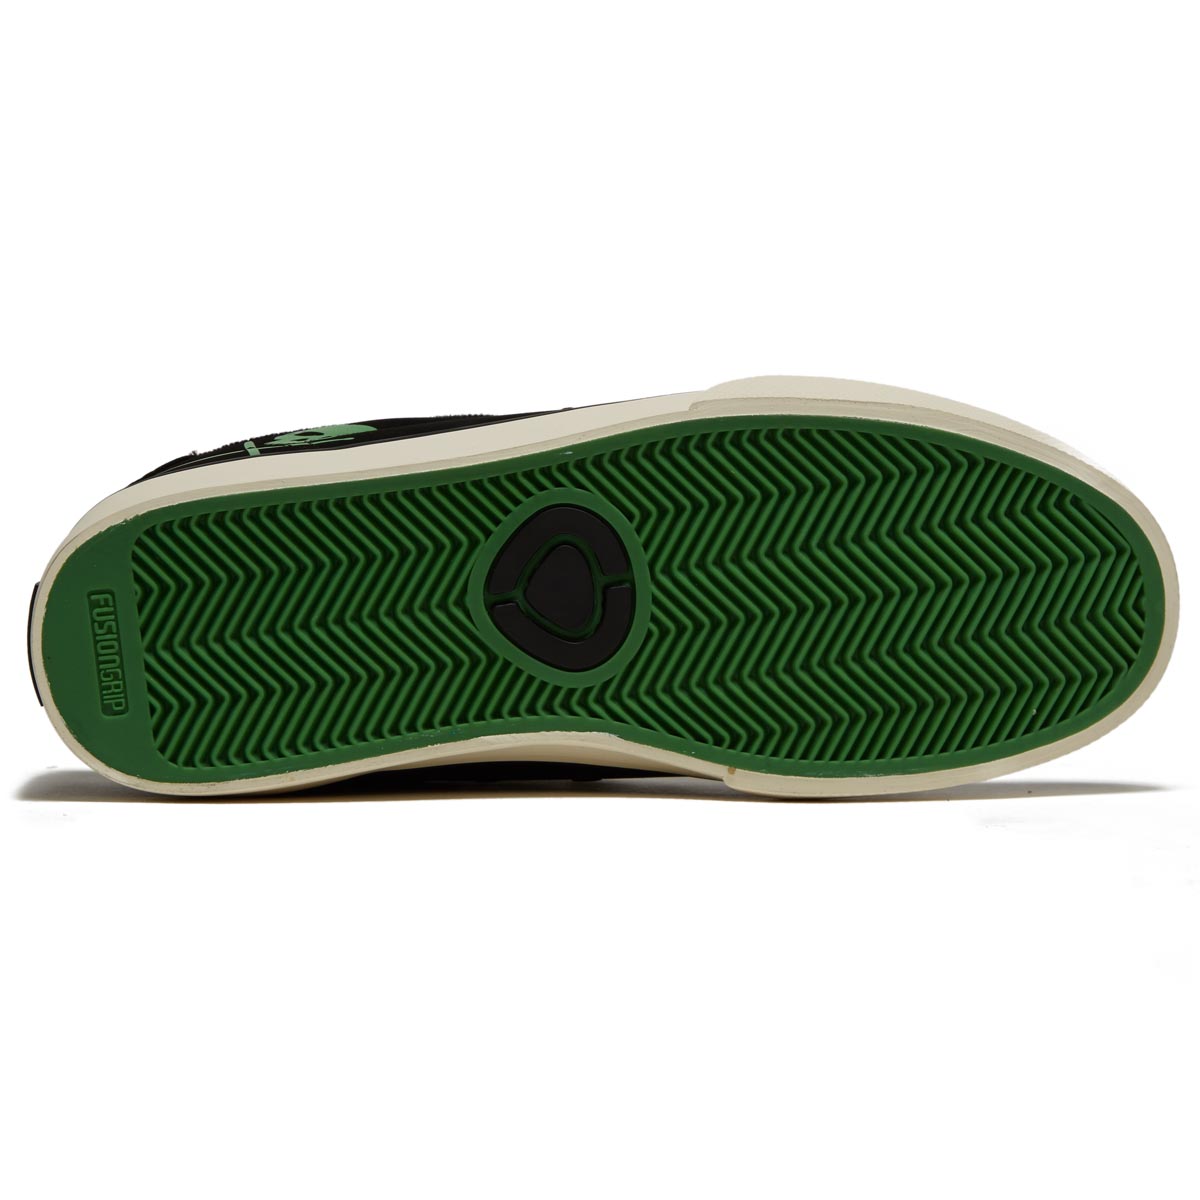 C1rca Buckler Sk Shoes - Black/Fluo Green image 4